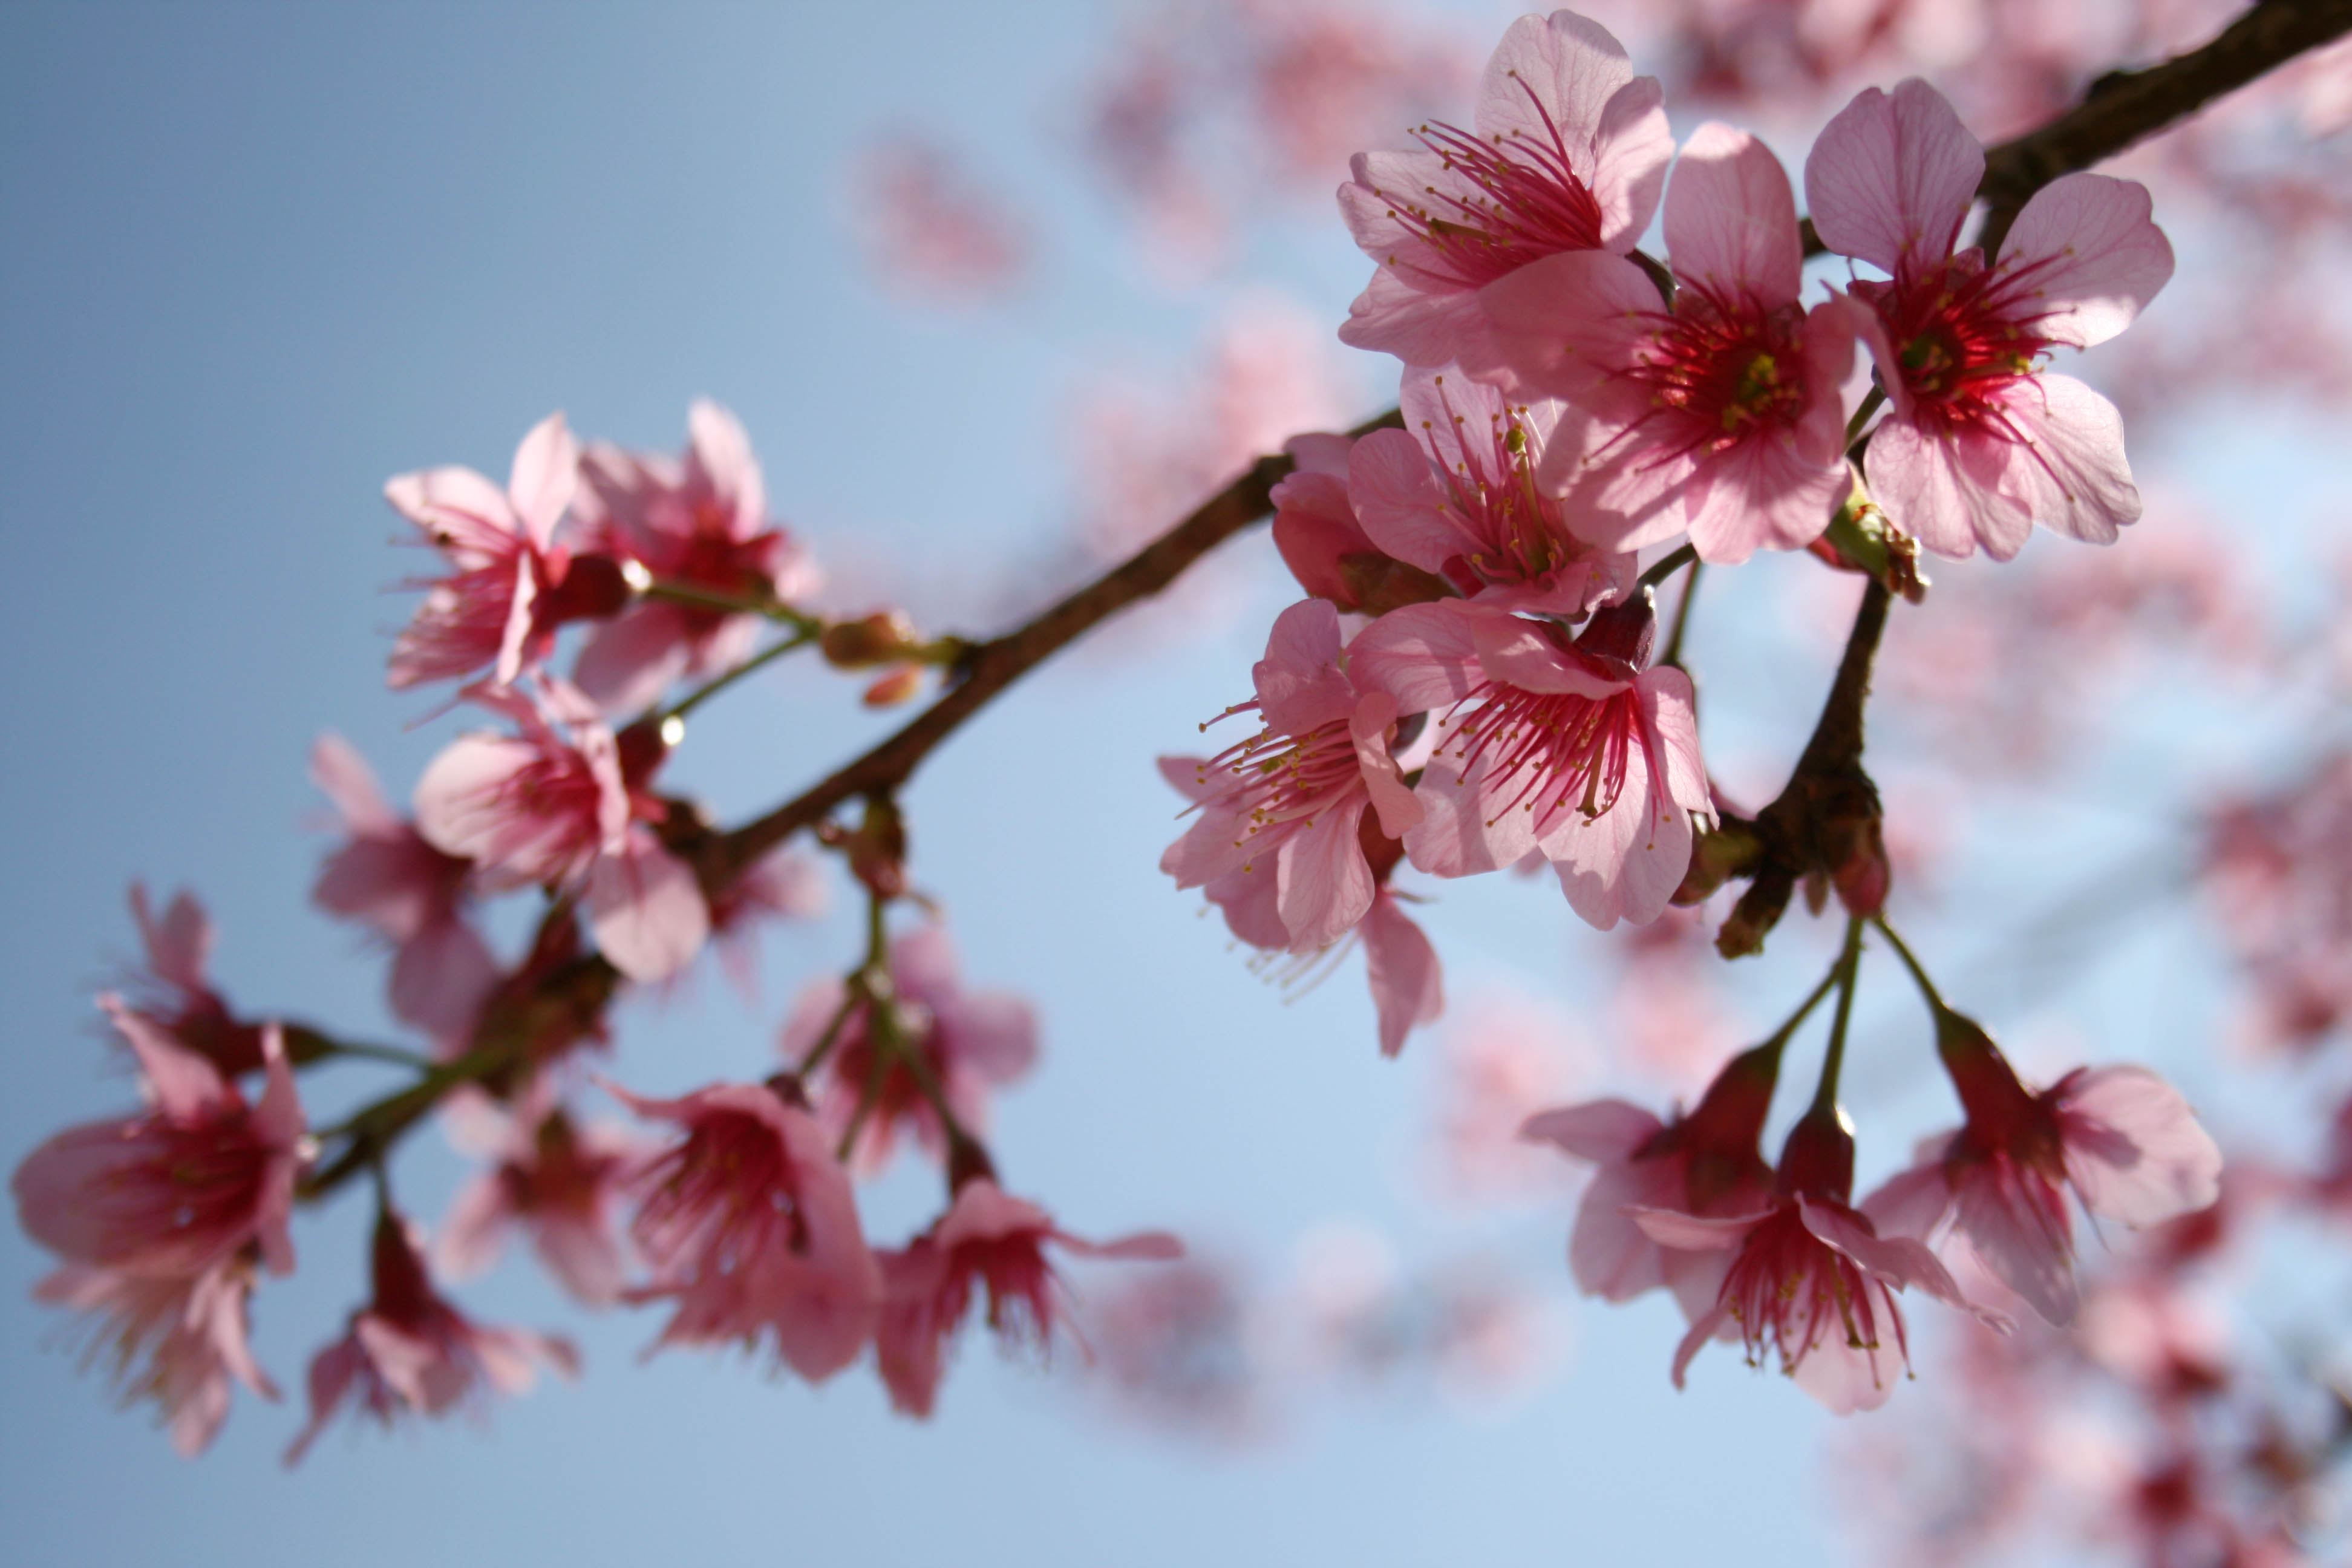 doi_suthep_coffee_break_cherry blossoms